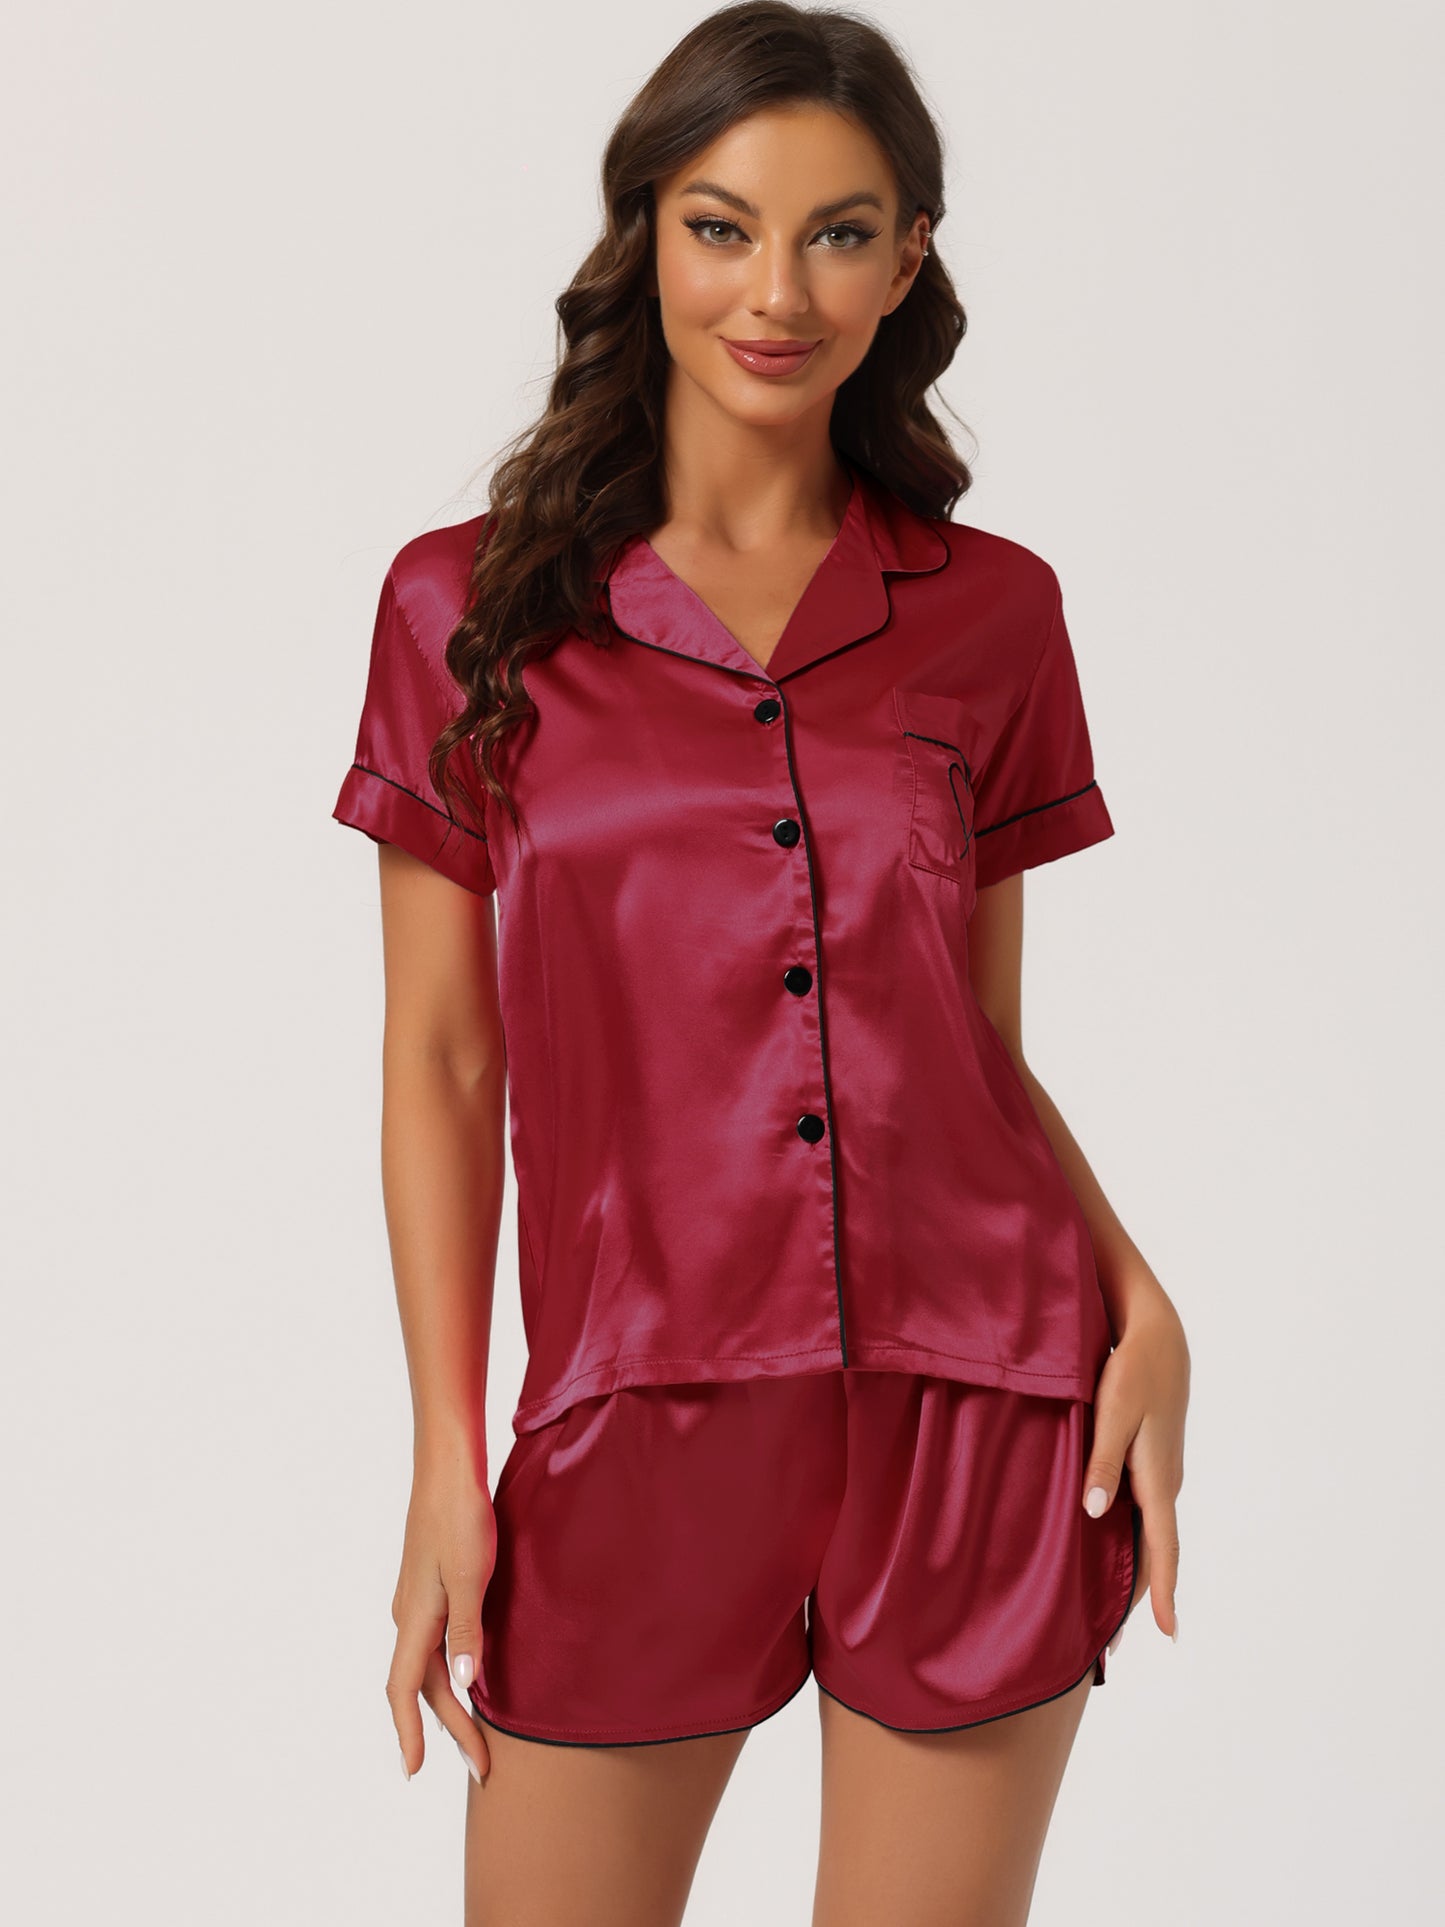 cheibear Pajama Loungewear Short Sleeves Button Down Satin Pj Sets Red Heart